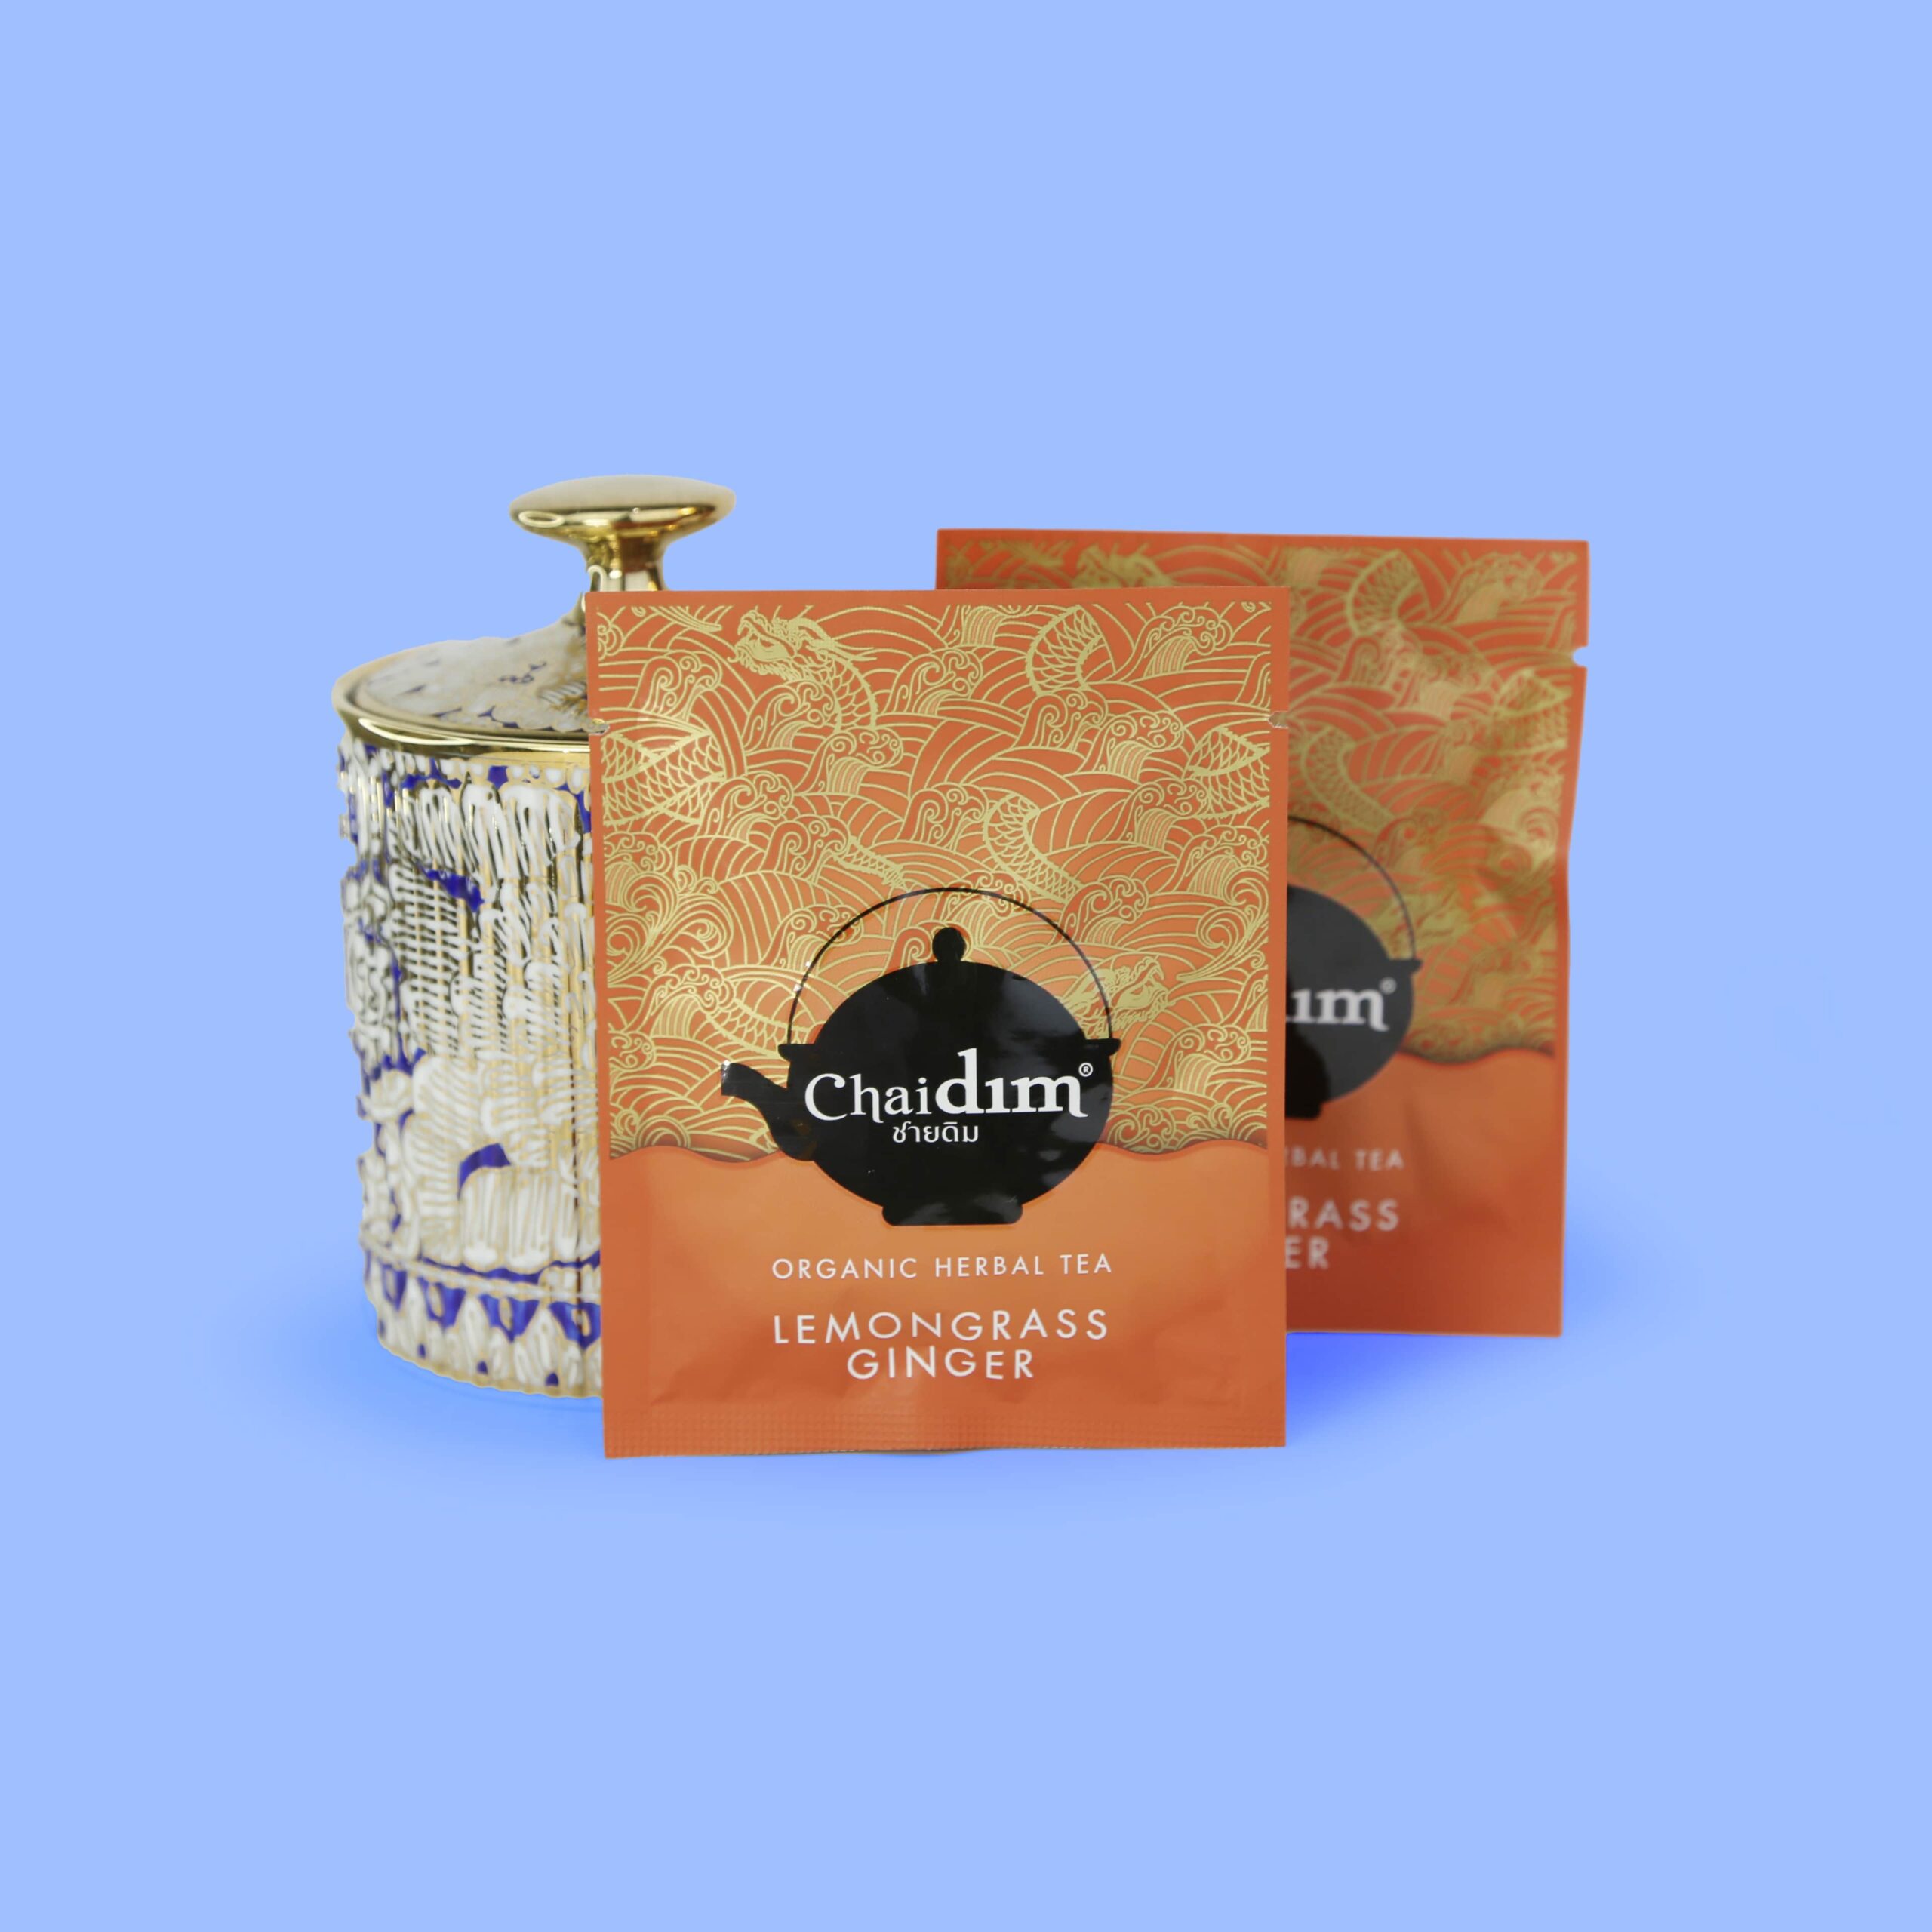 Chaidim Lemongrass ginger tea. Organic herbal tea made in Thailand